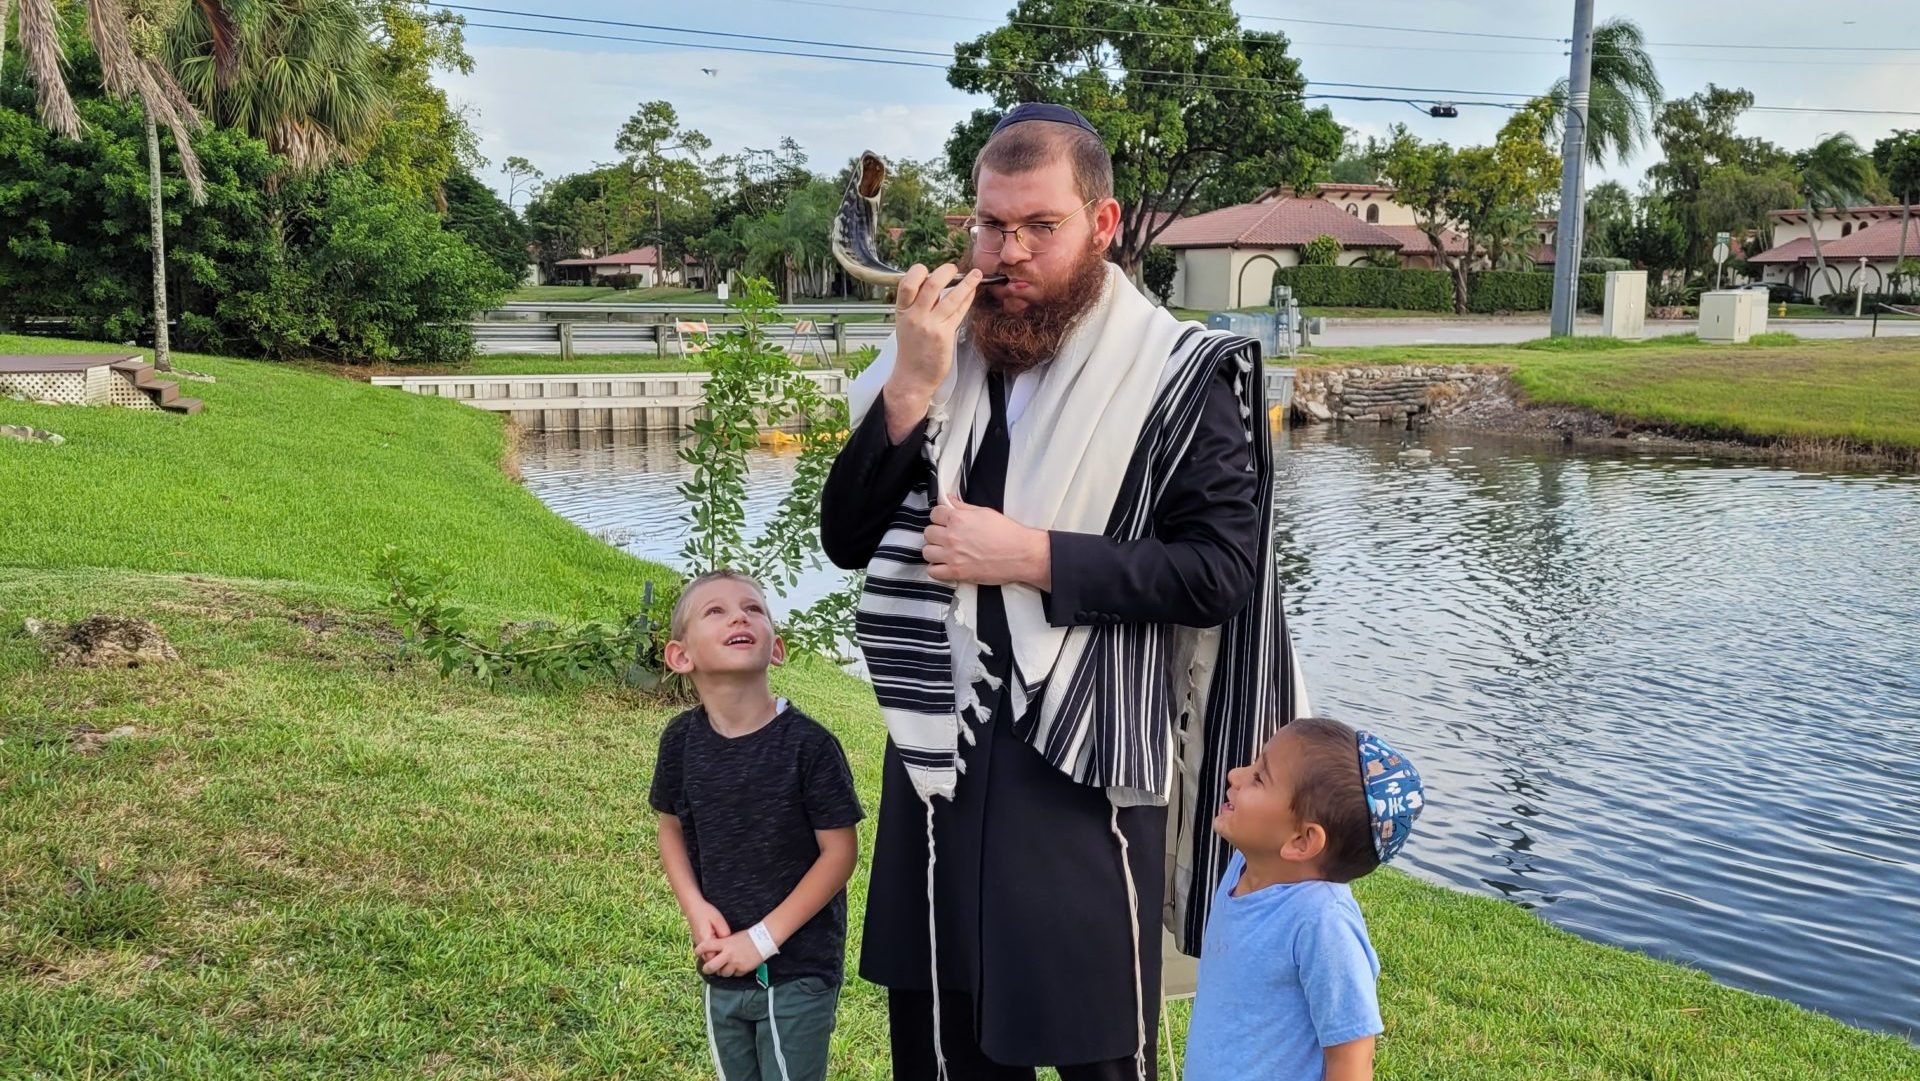 The Chabad Jewish Center of Tamarac Celebrates the New Year